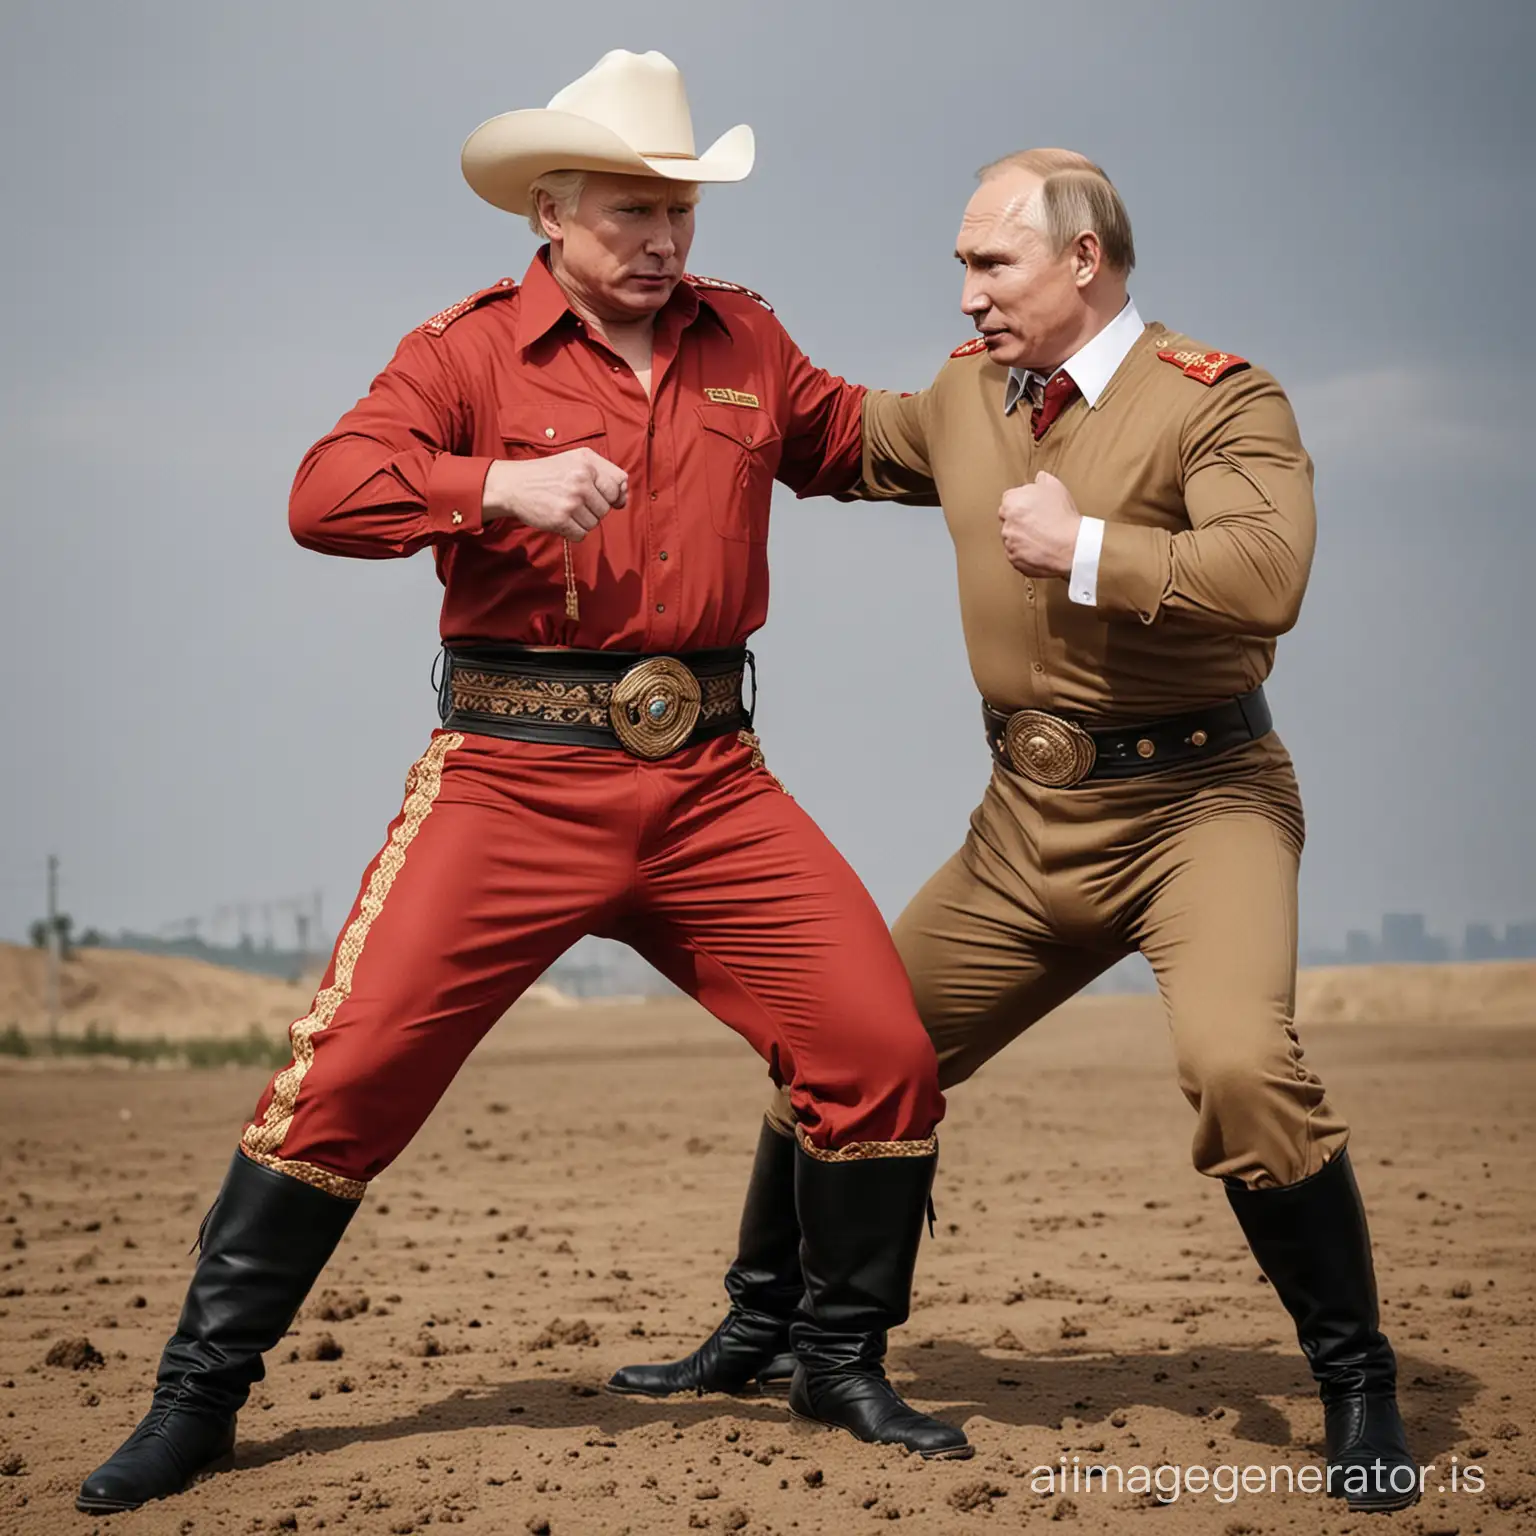 Putin-Wrestles-Trump-Soviet-Army-vs-Cowboy-Showdown